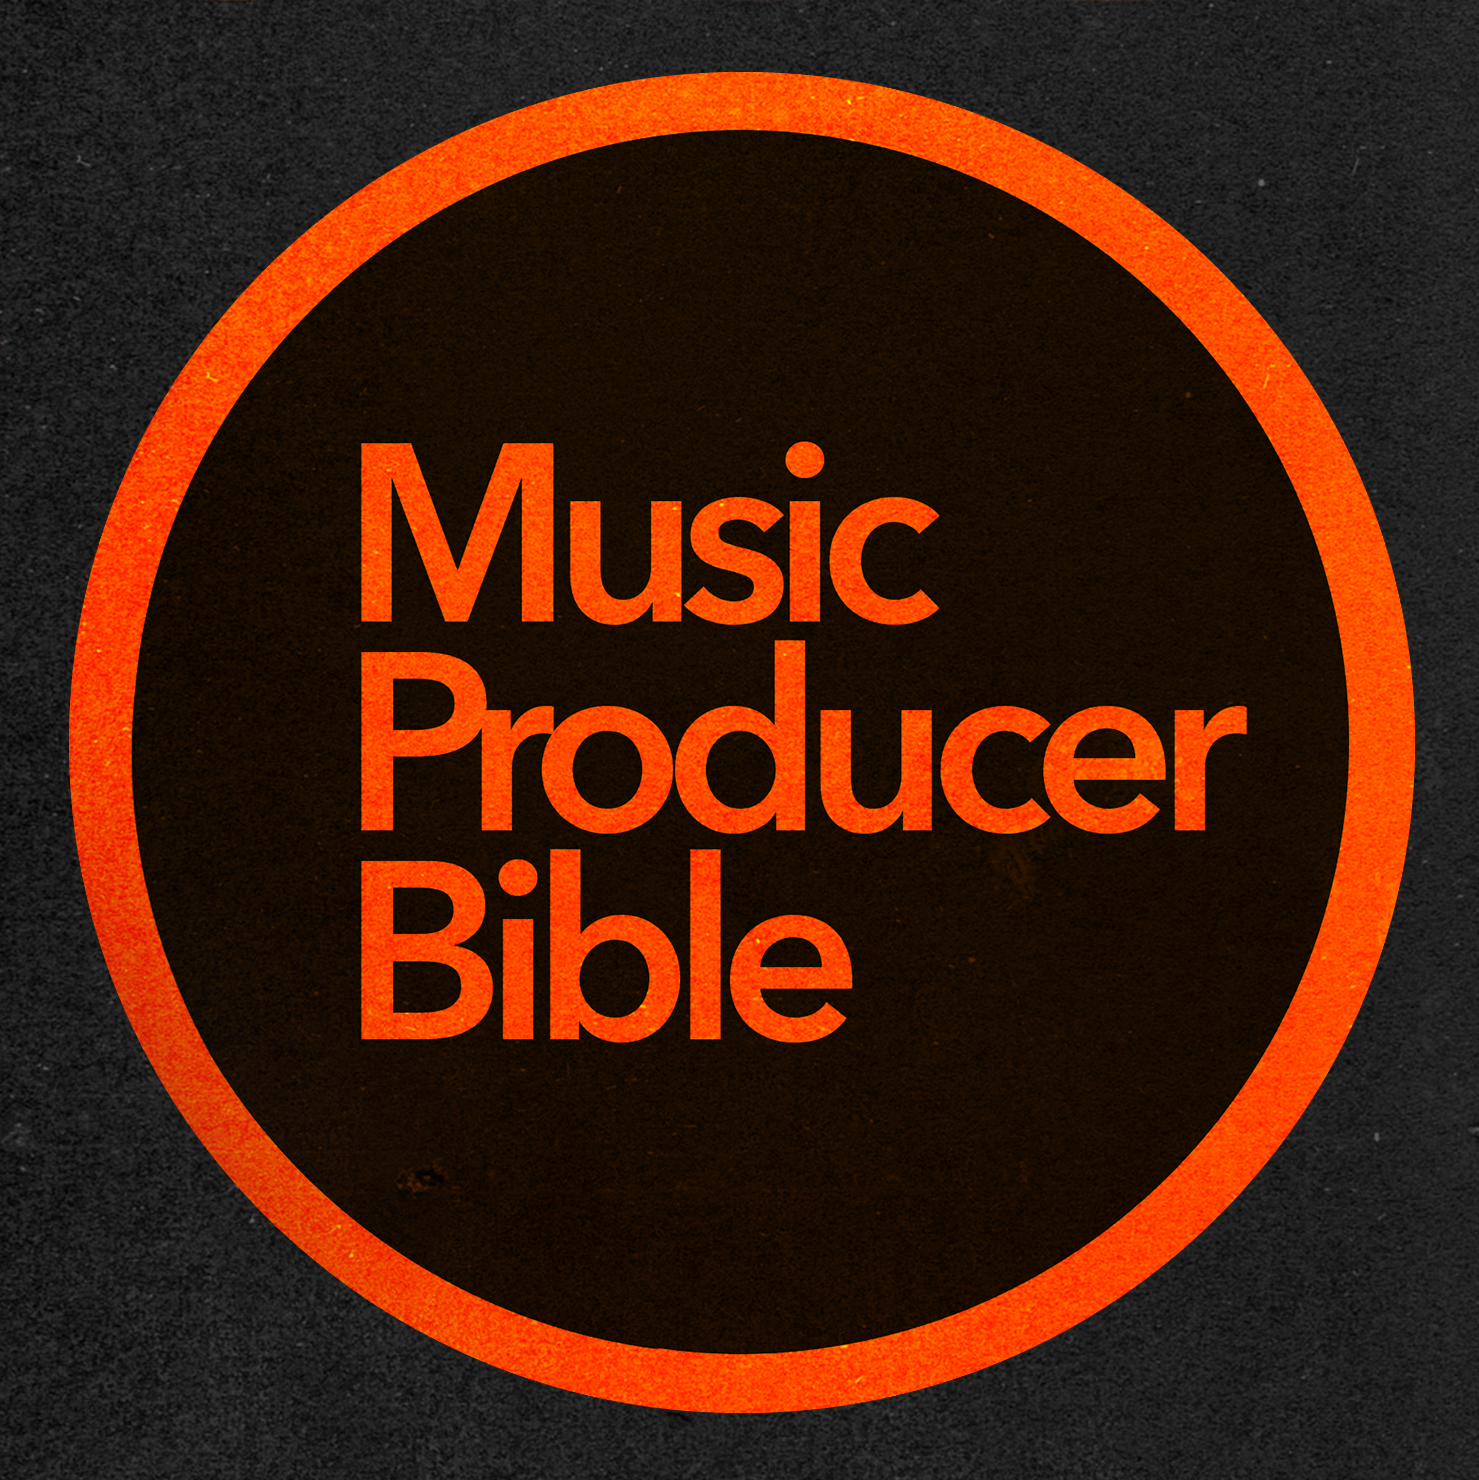 Music Producer Bible logo